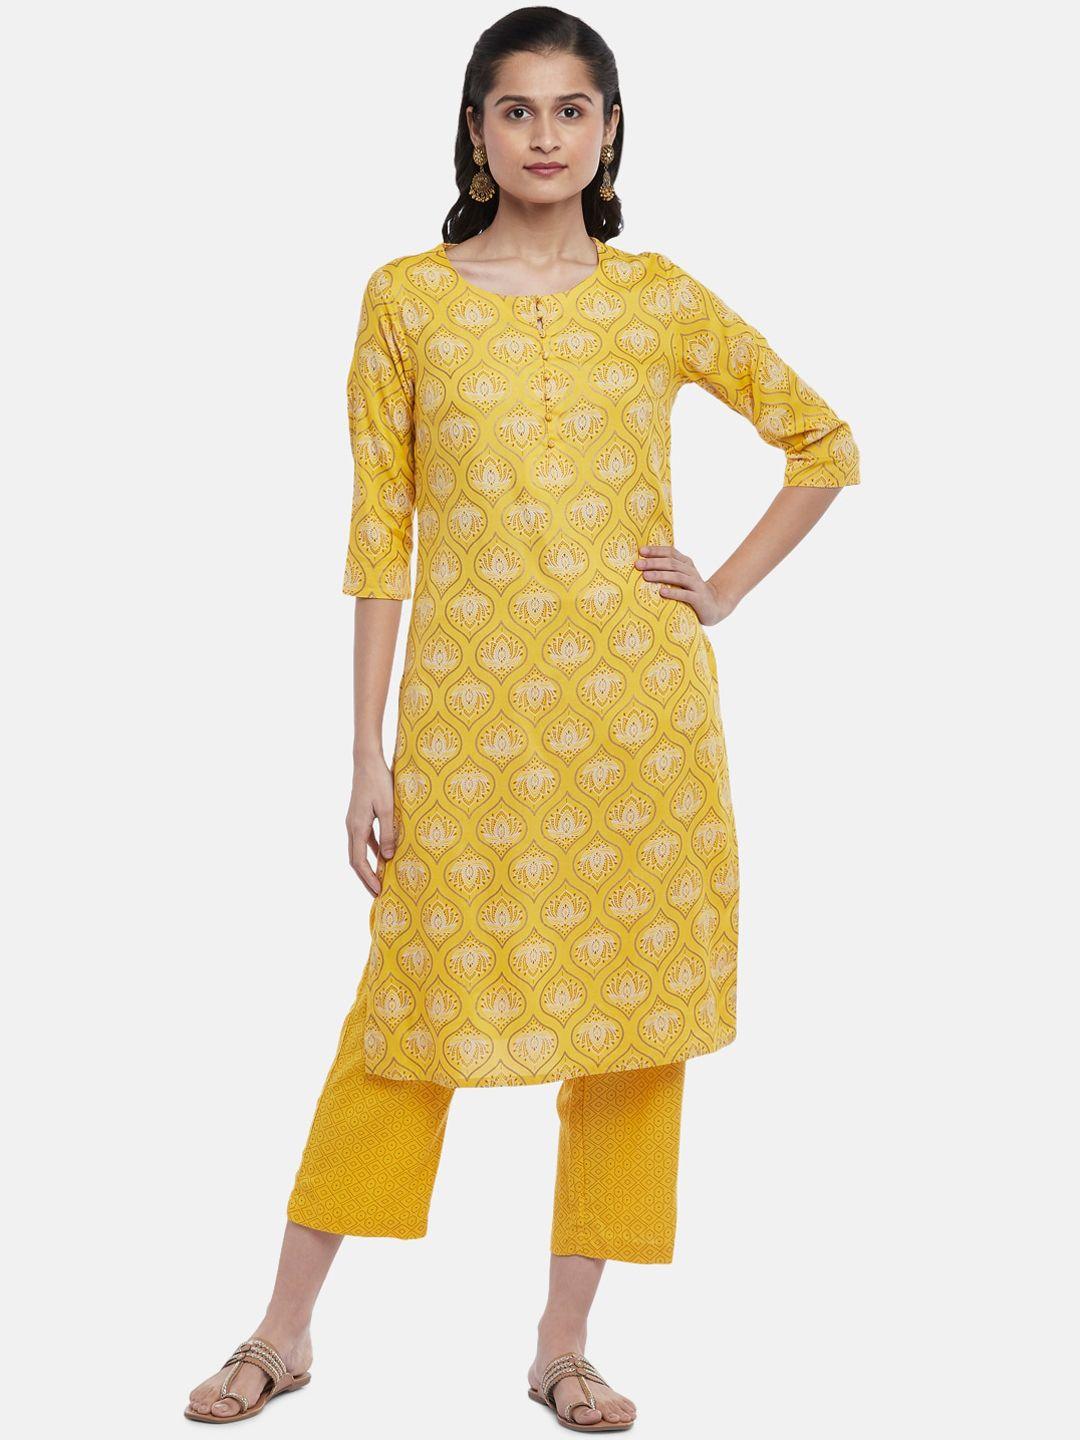 rangmanch by pantaloons women mustard yellow floral printed kurta with trousers